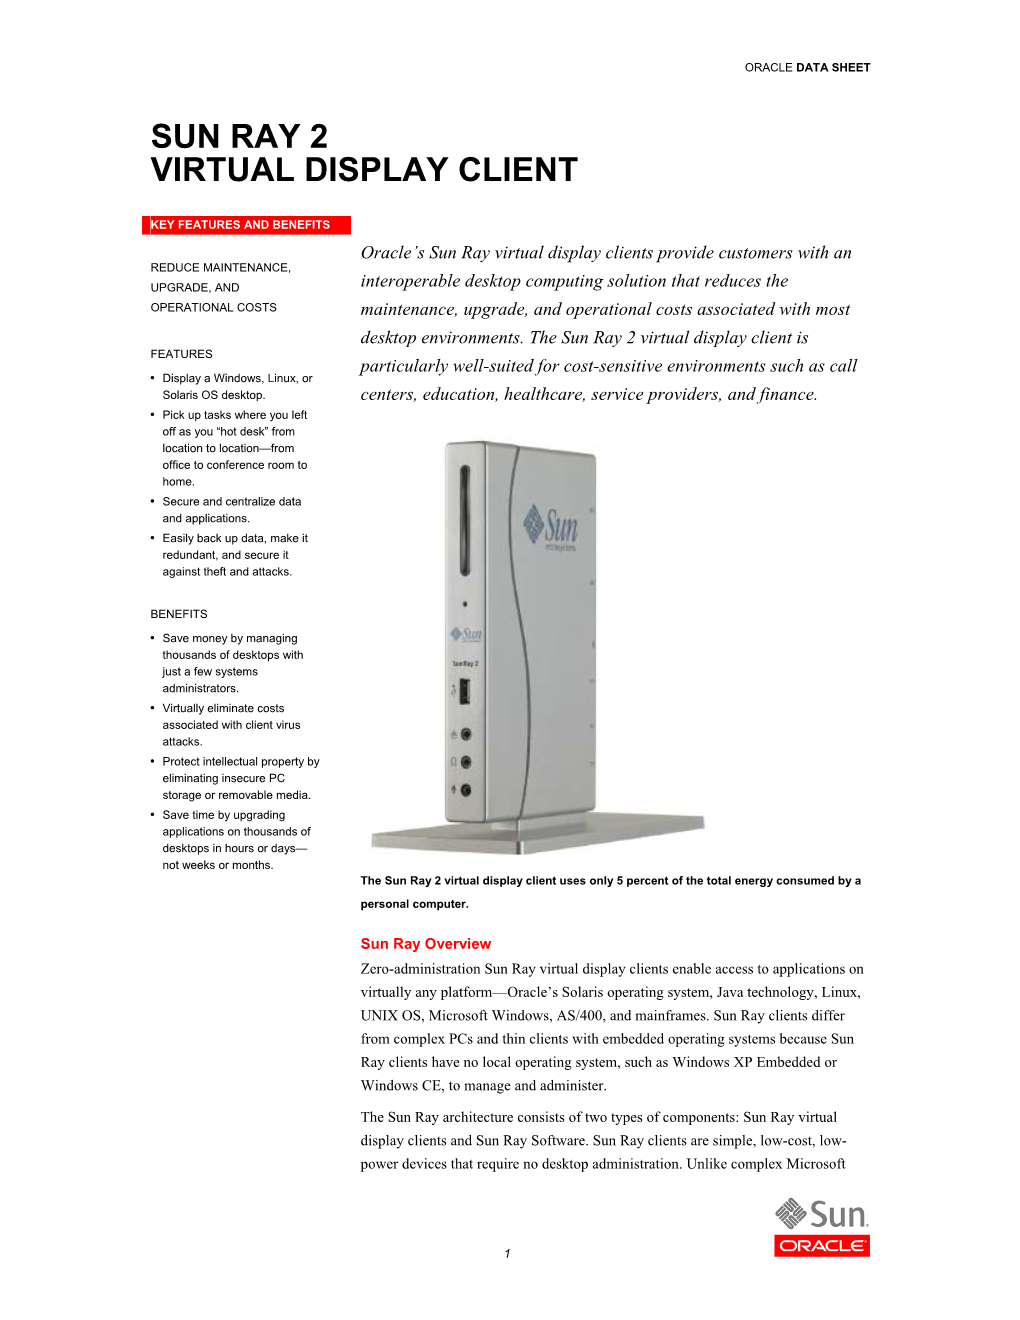 Sun Ray 2 Virtual Display Client Data Sheet